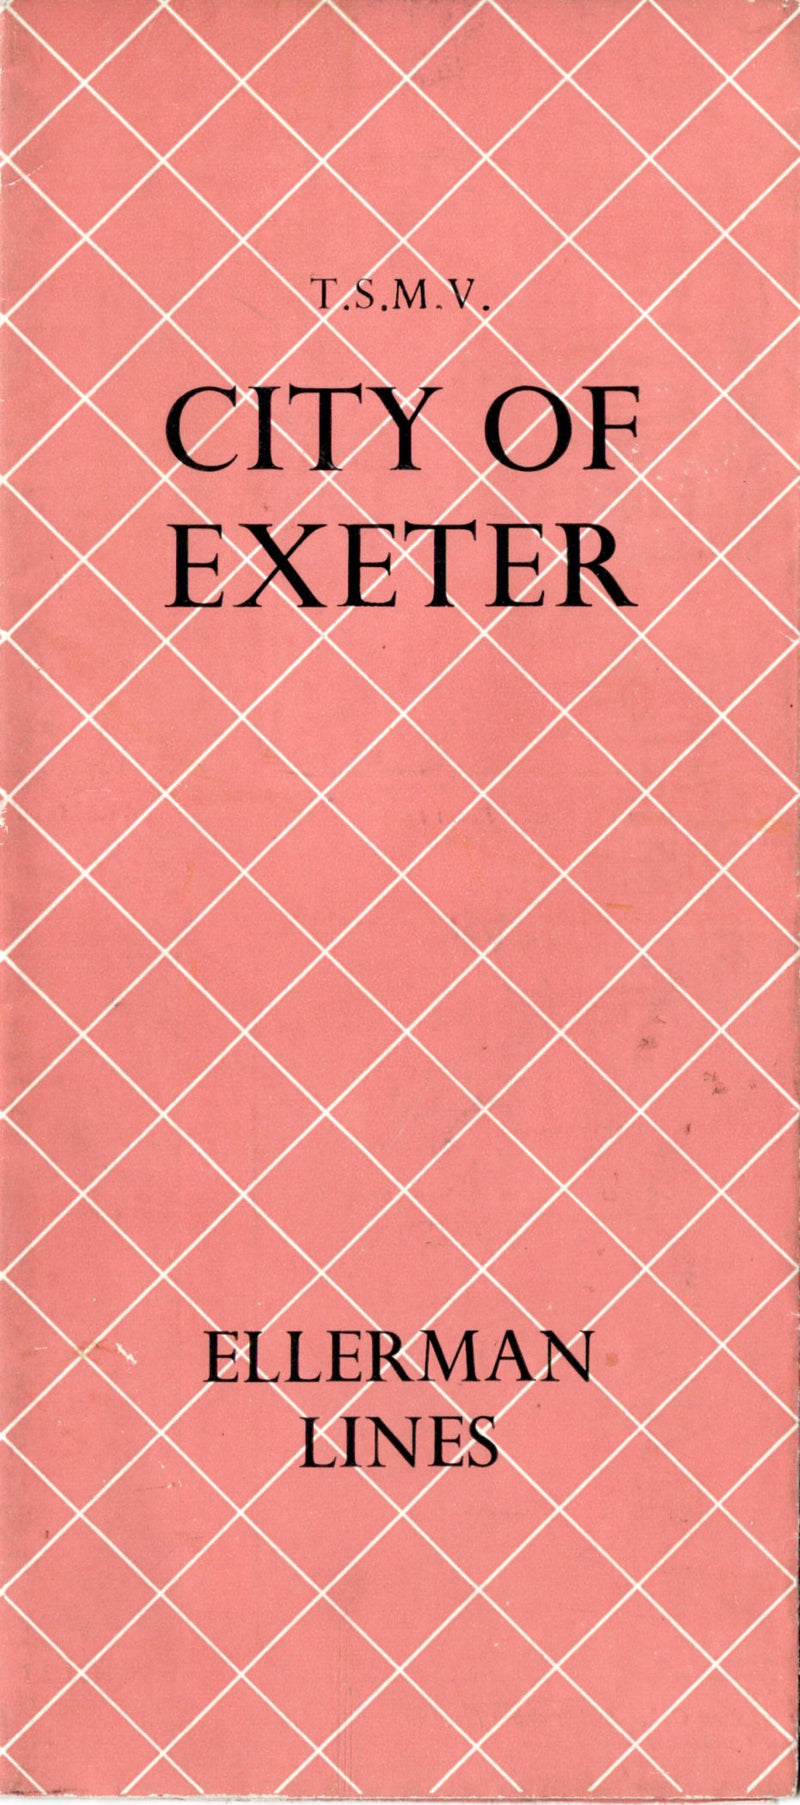 CITY OF EXETER: 1953 - Ellerman Line interiors brochure from 1956